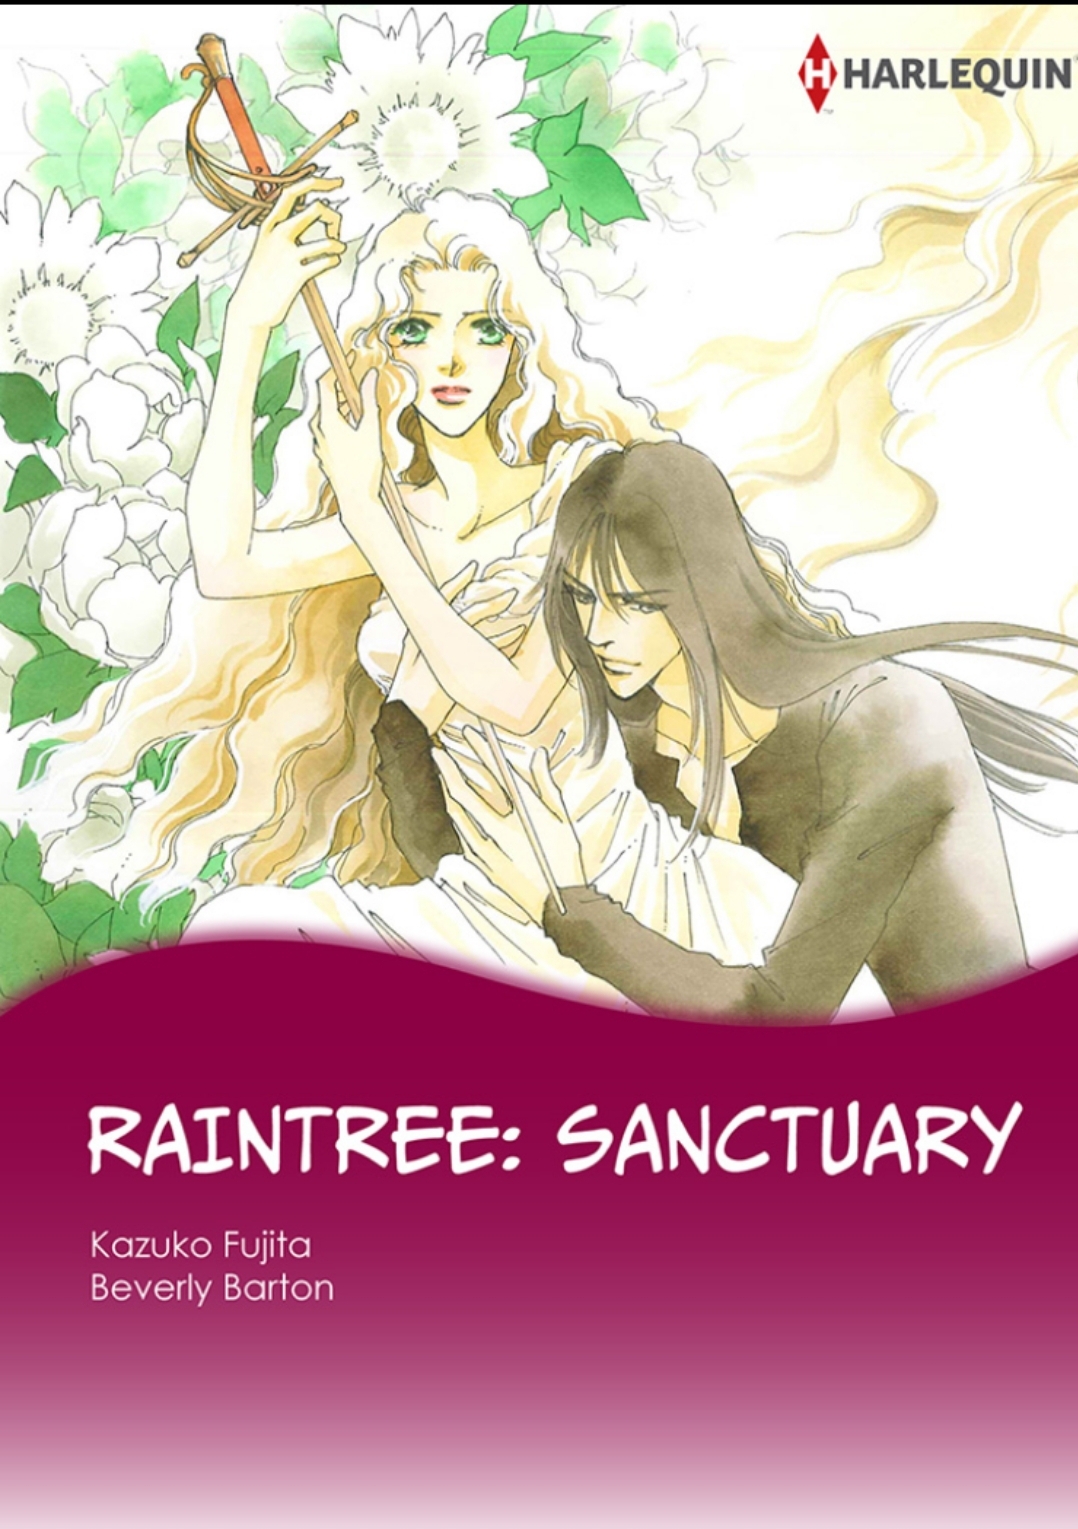 Raintree: Sanctuary (The story of the Raintree Clan 3) Vol.1 Ch.1